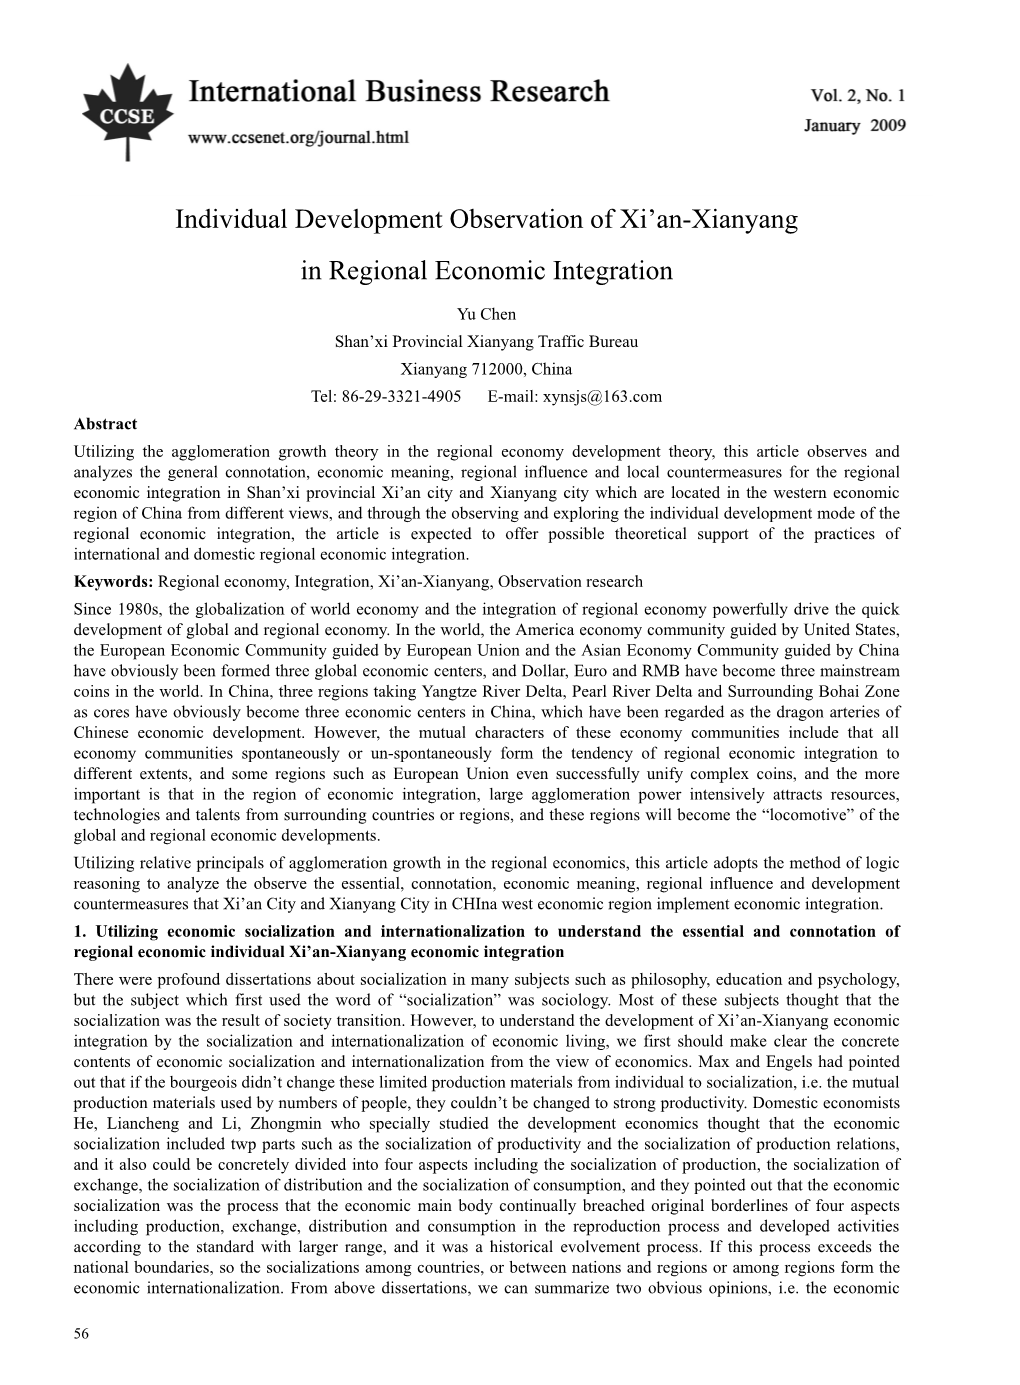 Individual Development Observation of Xi'an-Xianyang in Regional